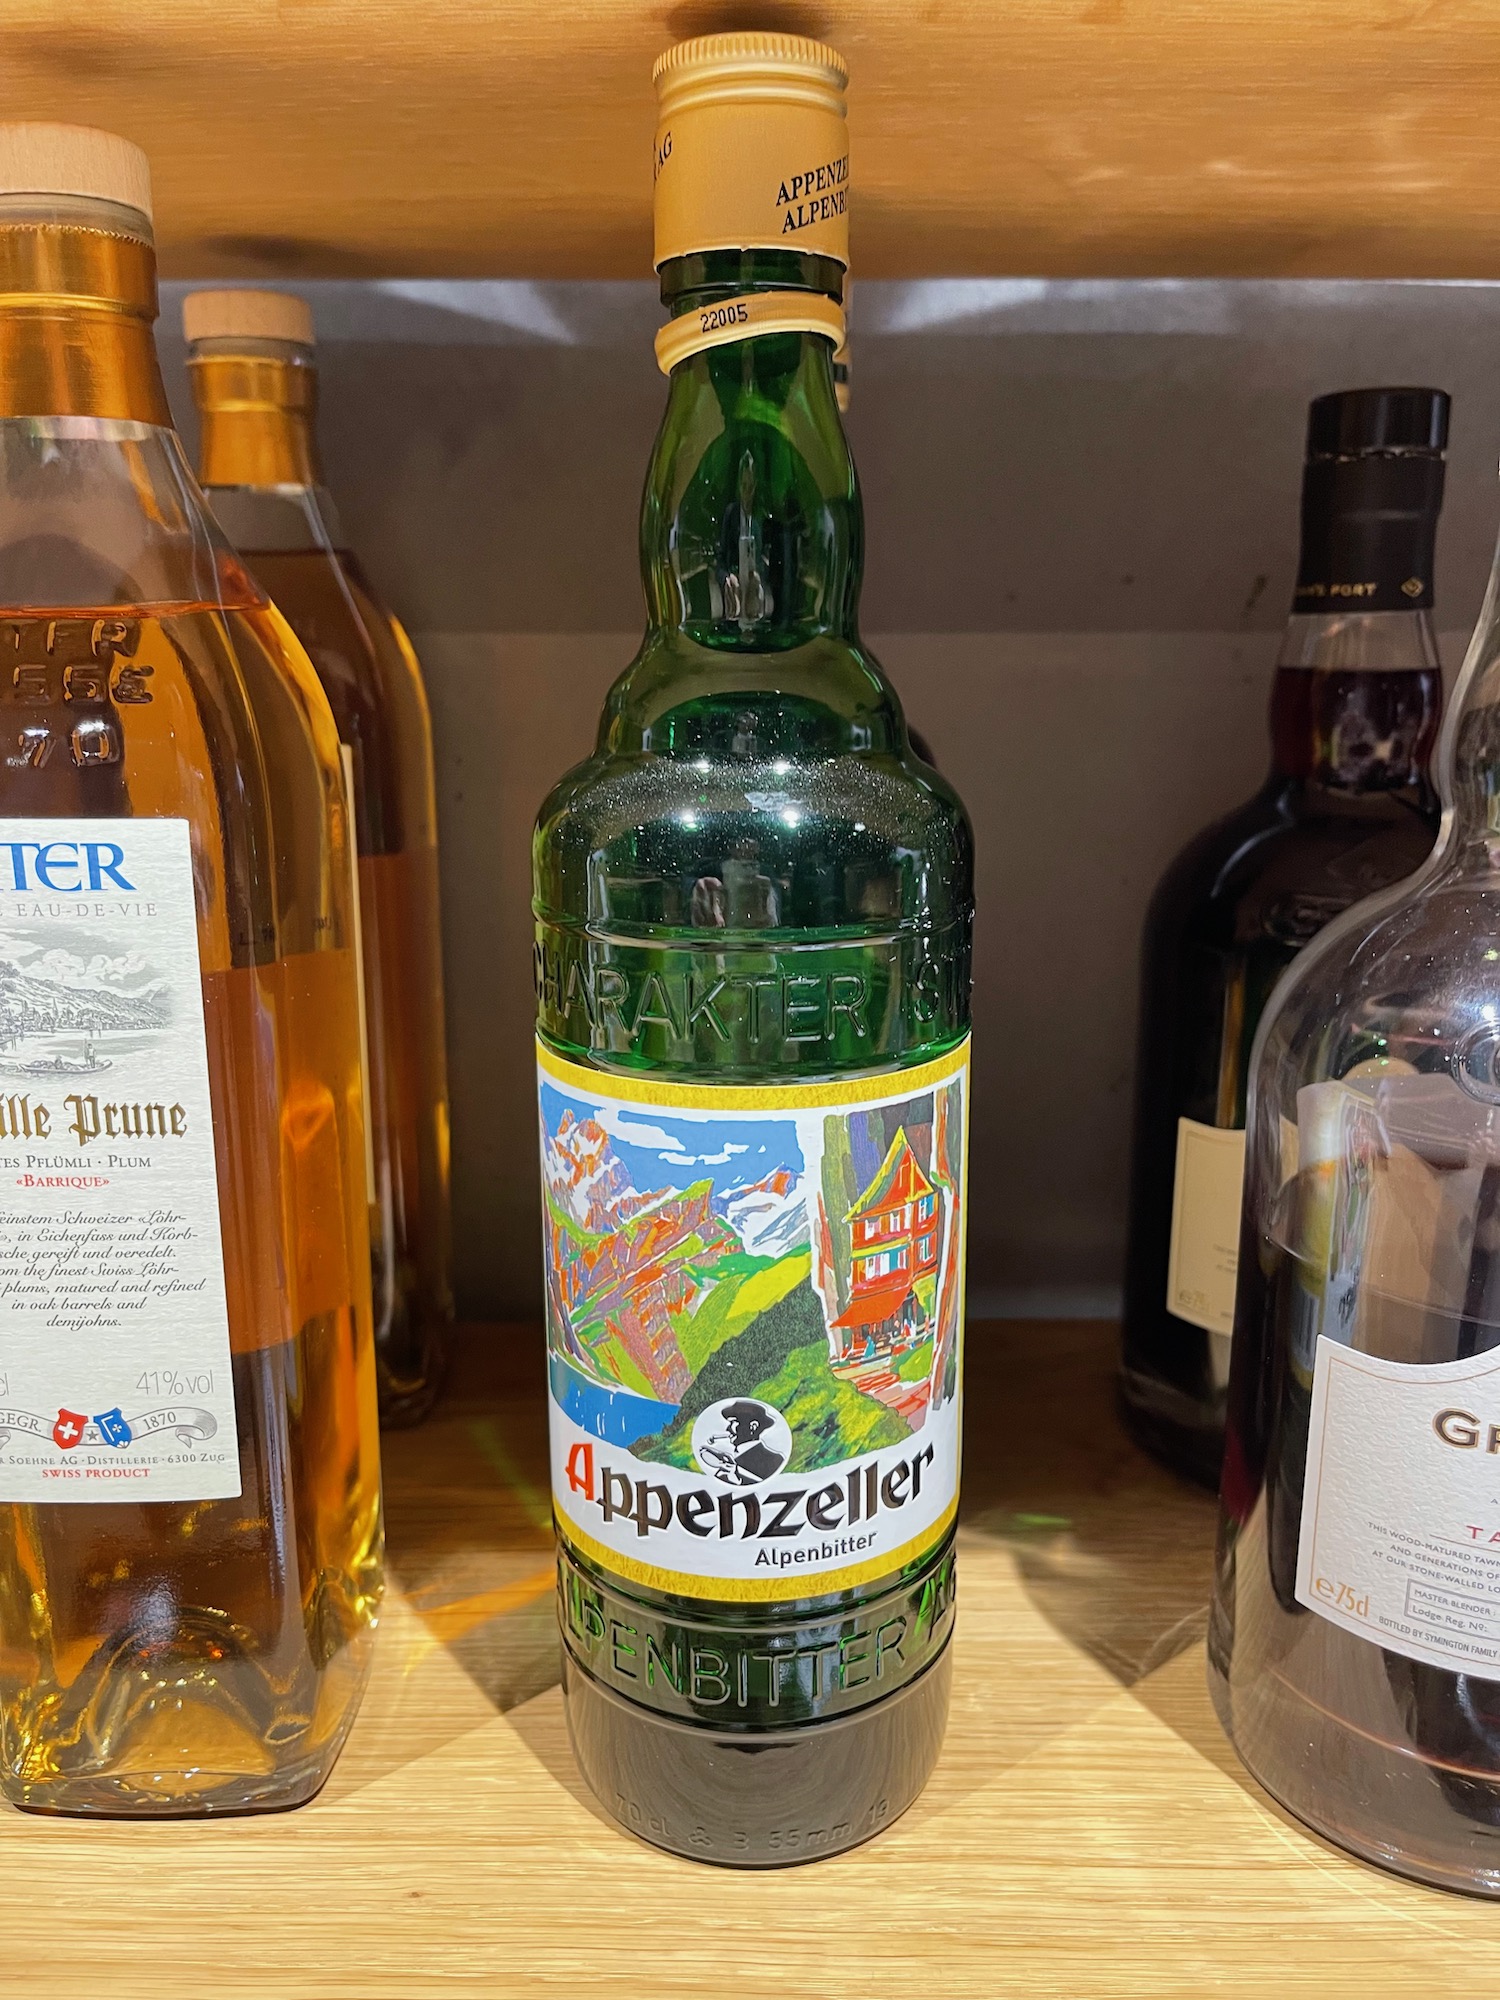 a green bottle of liquor on a shelf